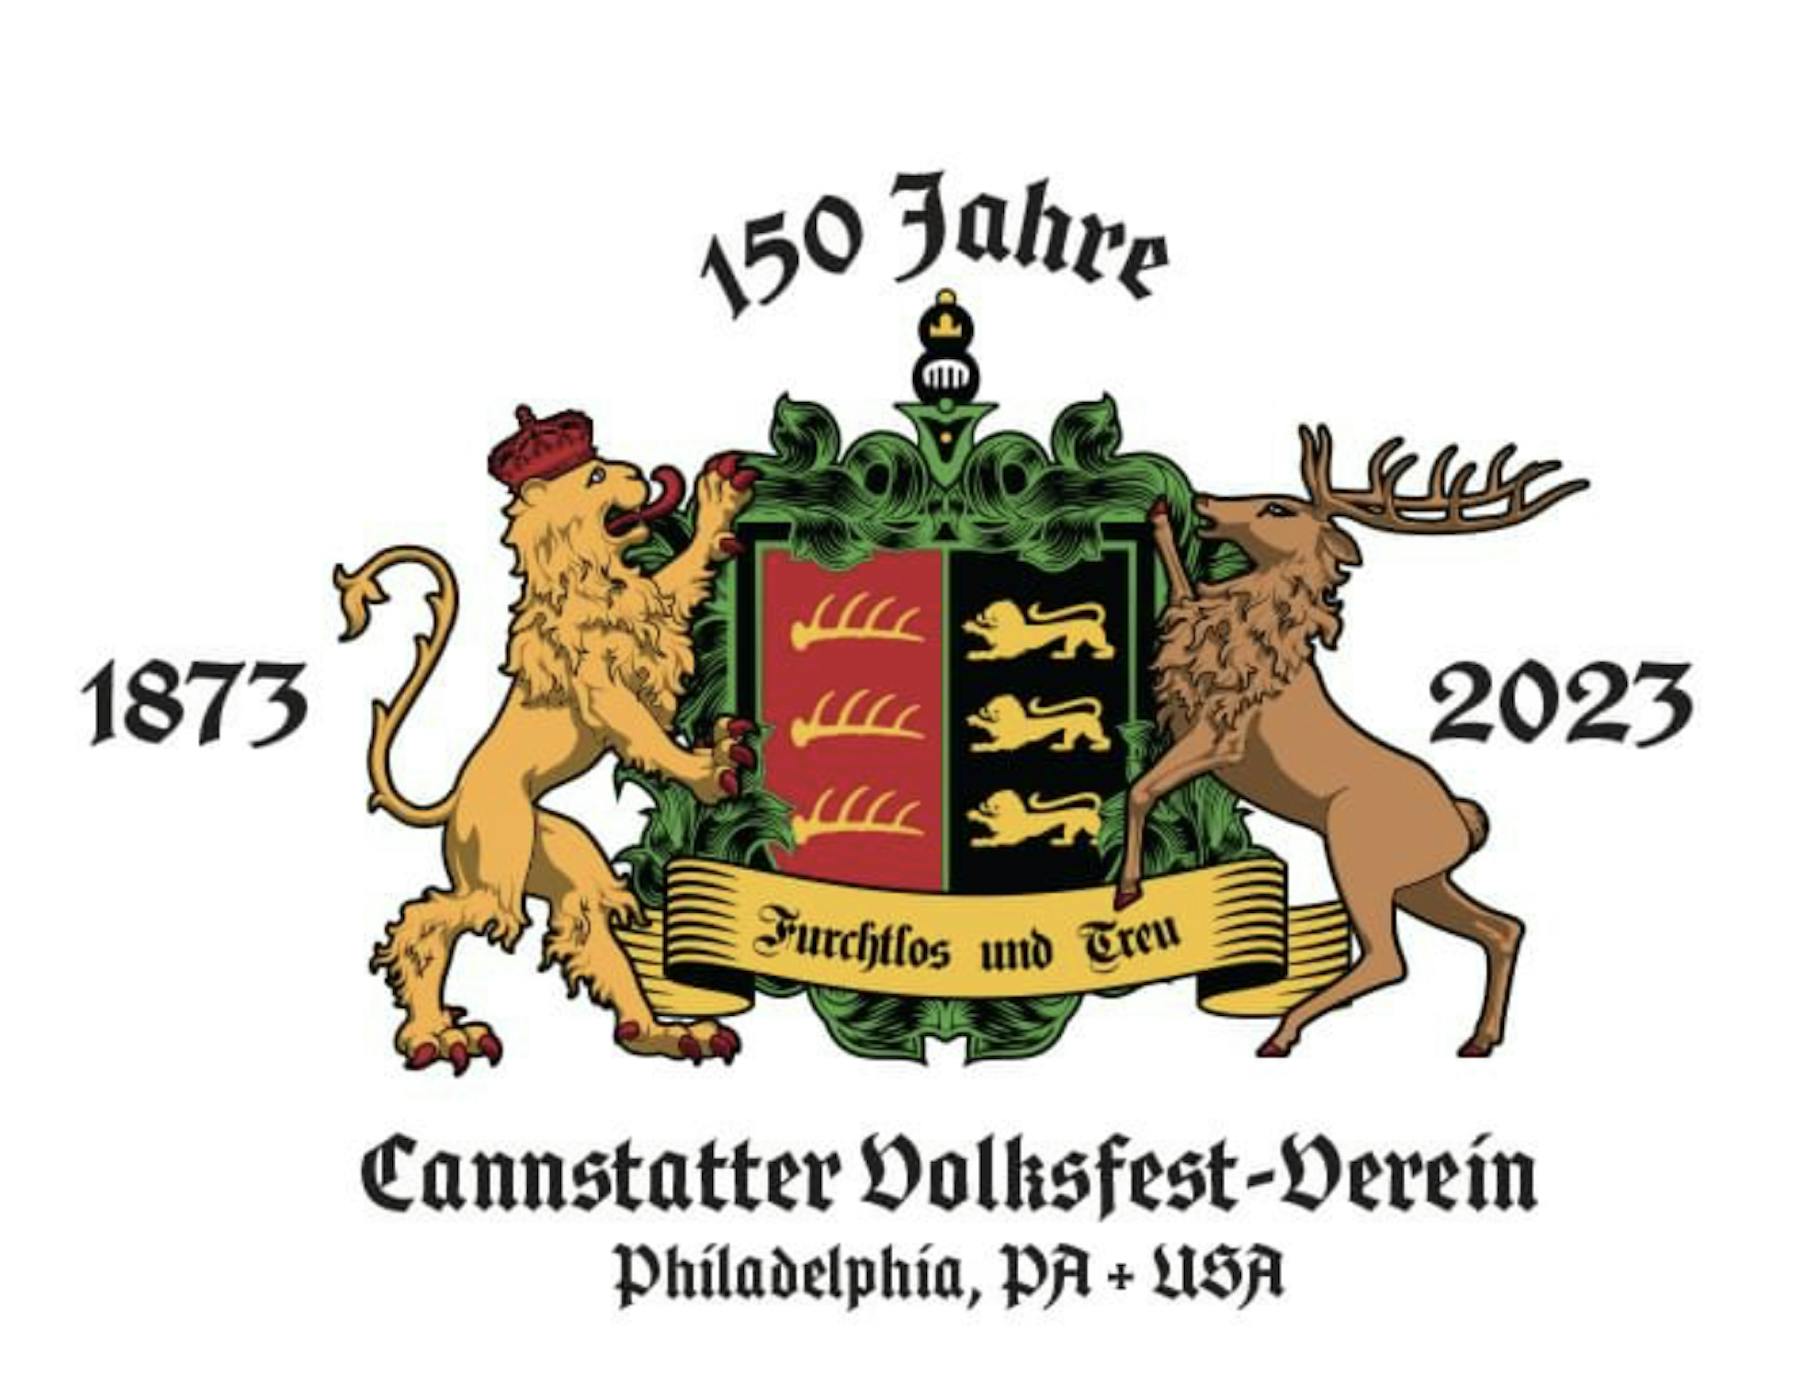 Cannstatter | Philadelphia\'s Volksfest-Verein 150th [3-11-2023] in 1873 Verein largest Cannstatter Volksfest club, German-American Banquet Anniversary founded |